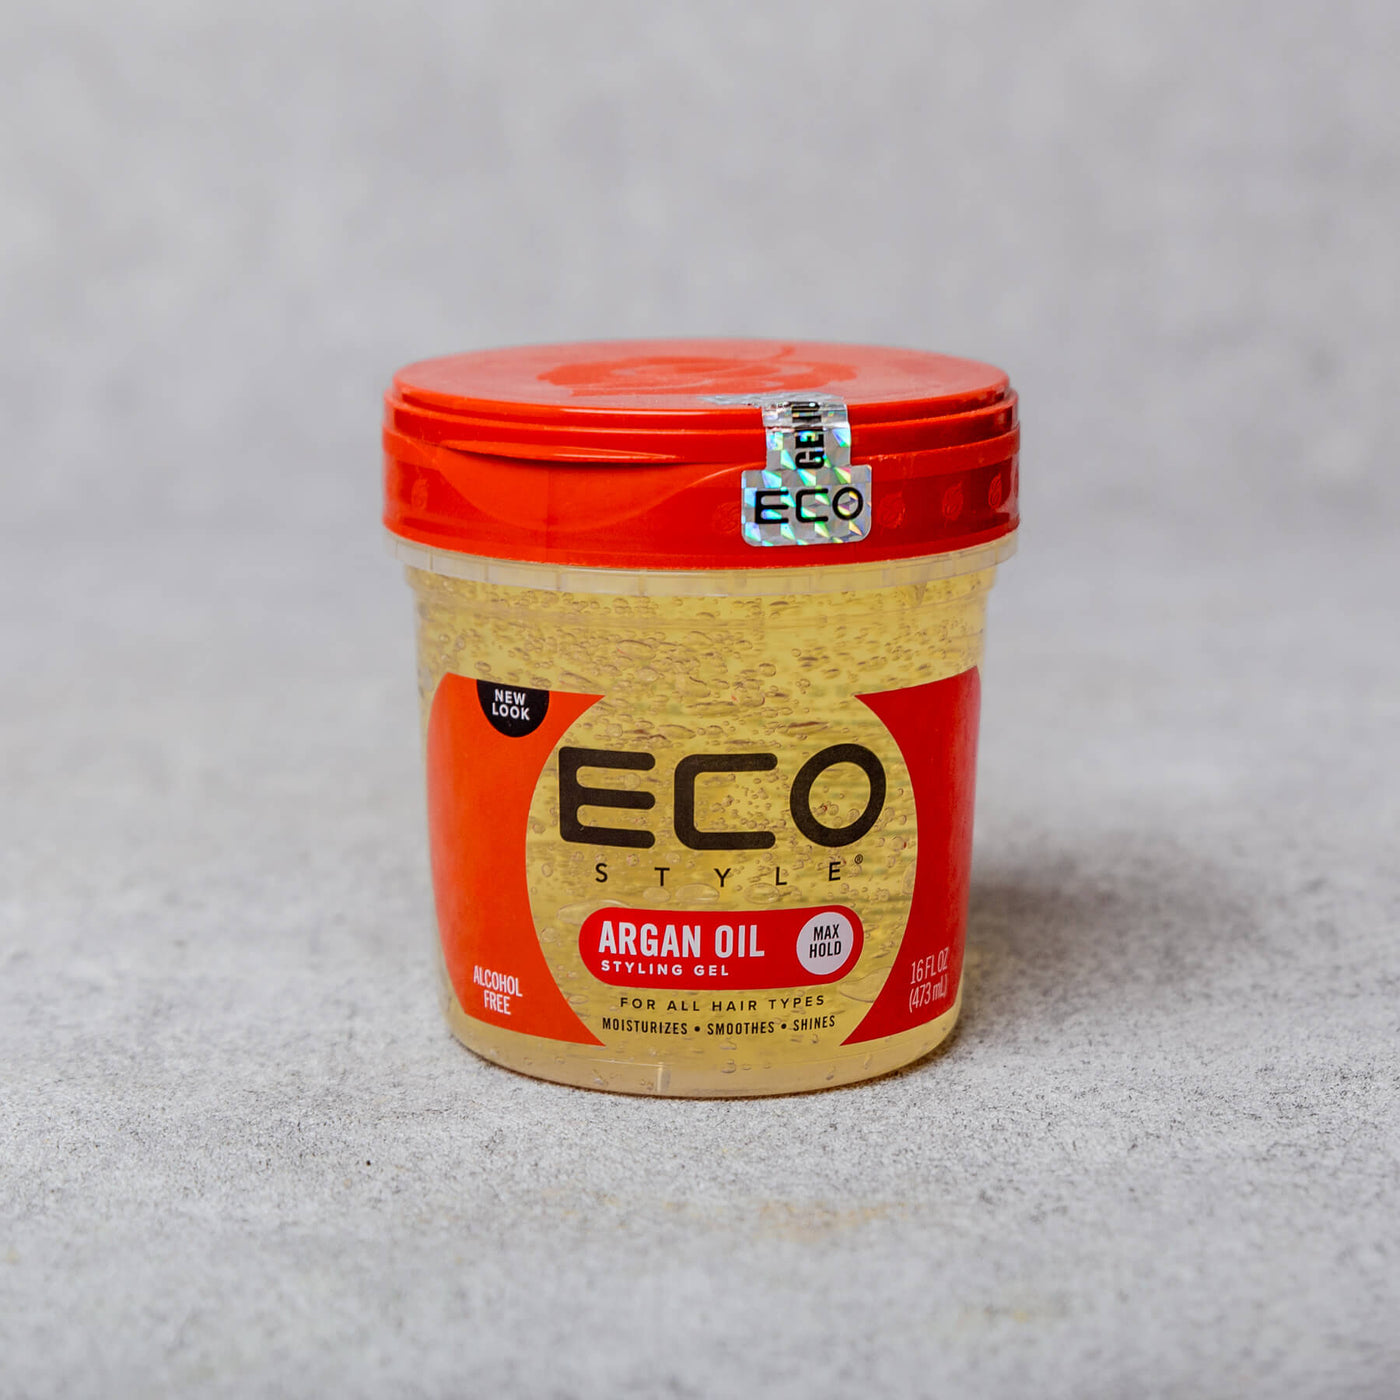 Eco Style - Styling Gel (Argan Oil)